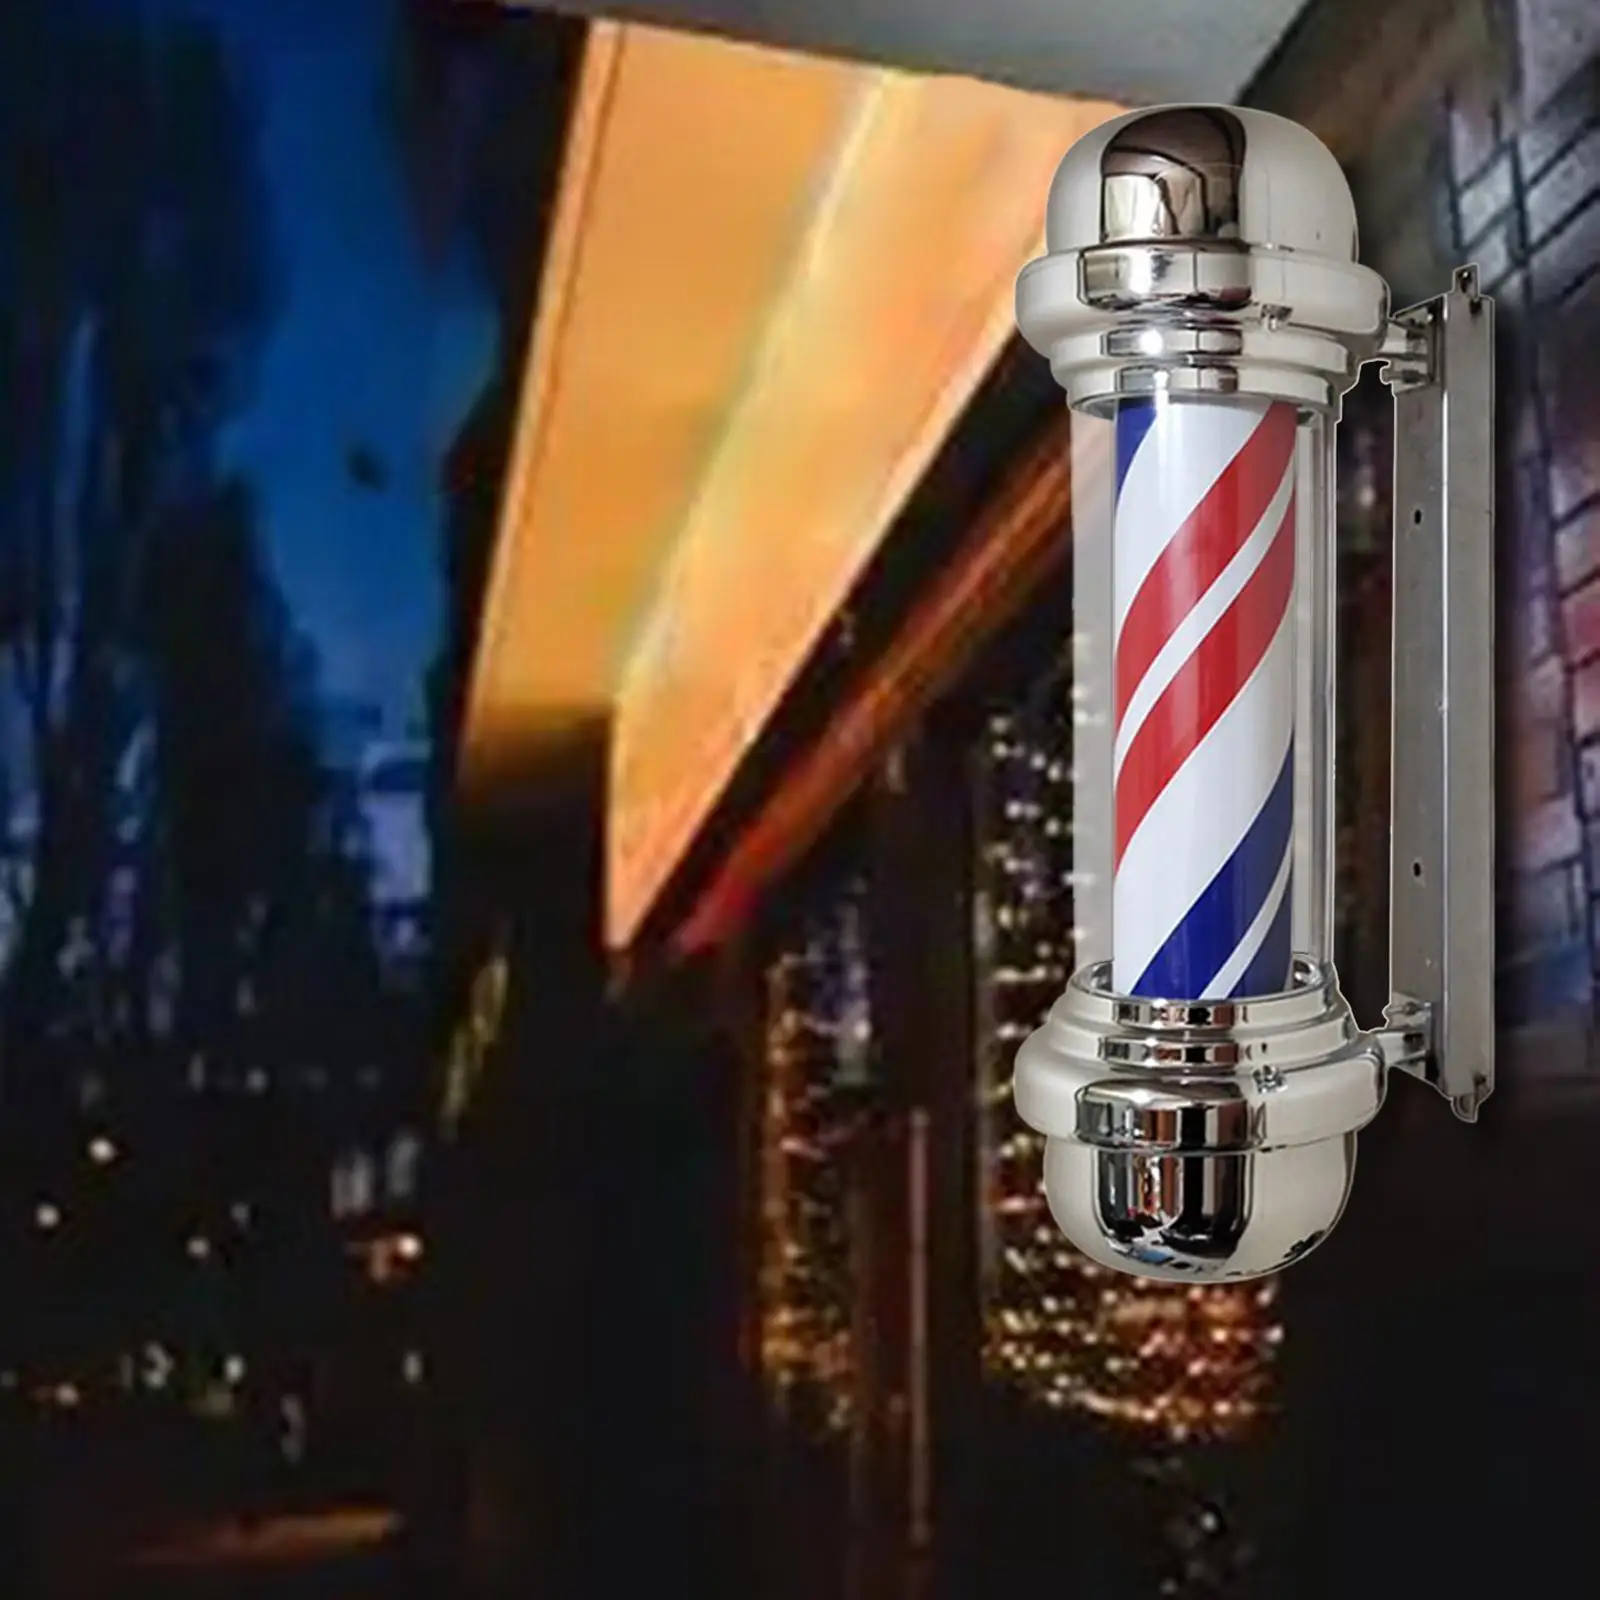 Rotating Barber Pole Lights LED Strips Waterproof Nightlight Novelty Lighting